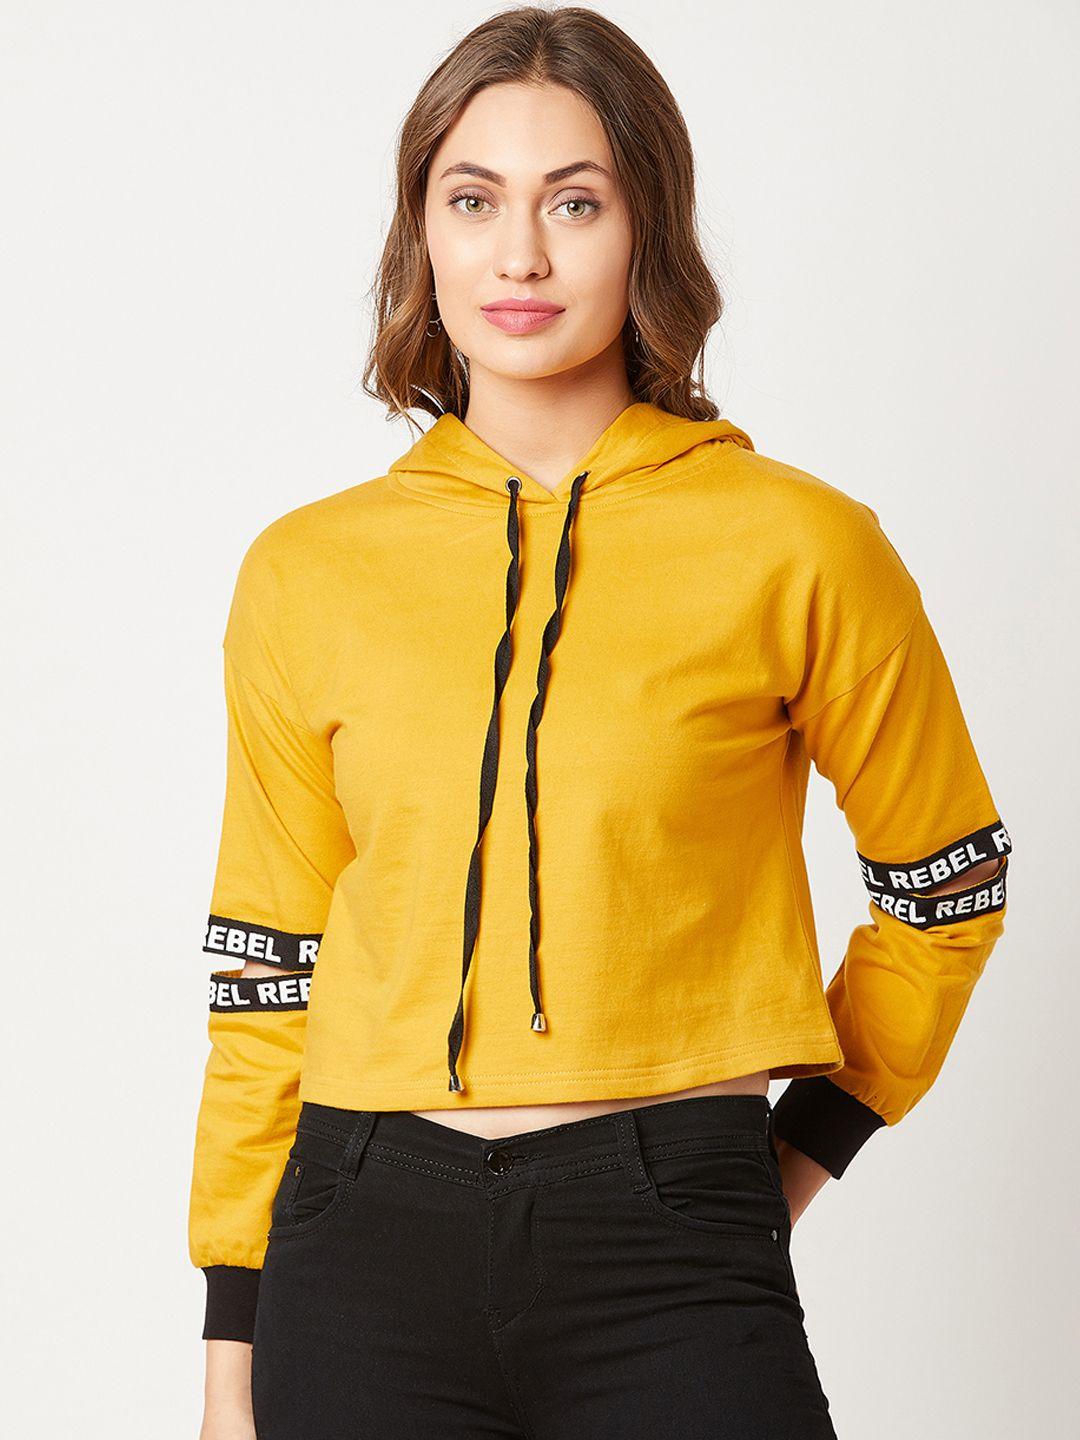 miss-chase-women-mustard-yellow-solid-hooded-sweatshirt